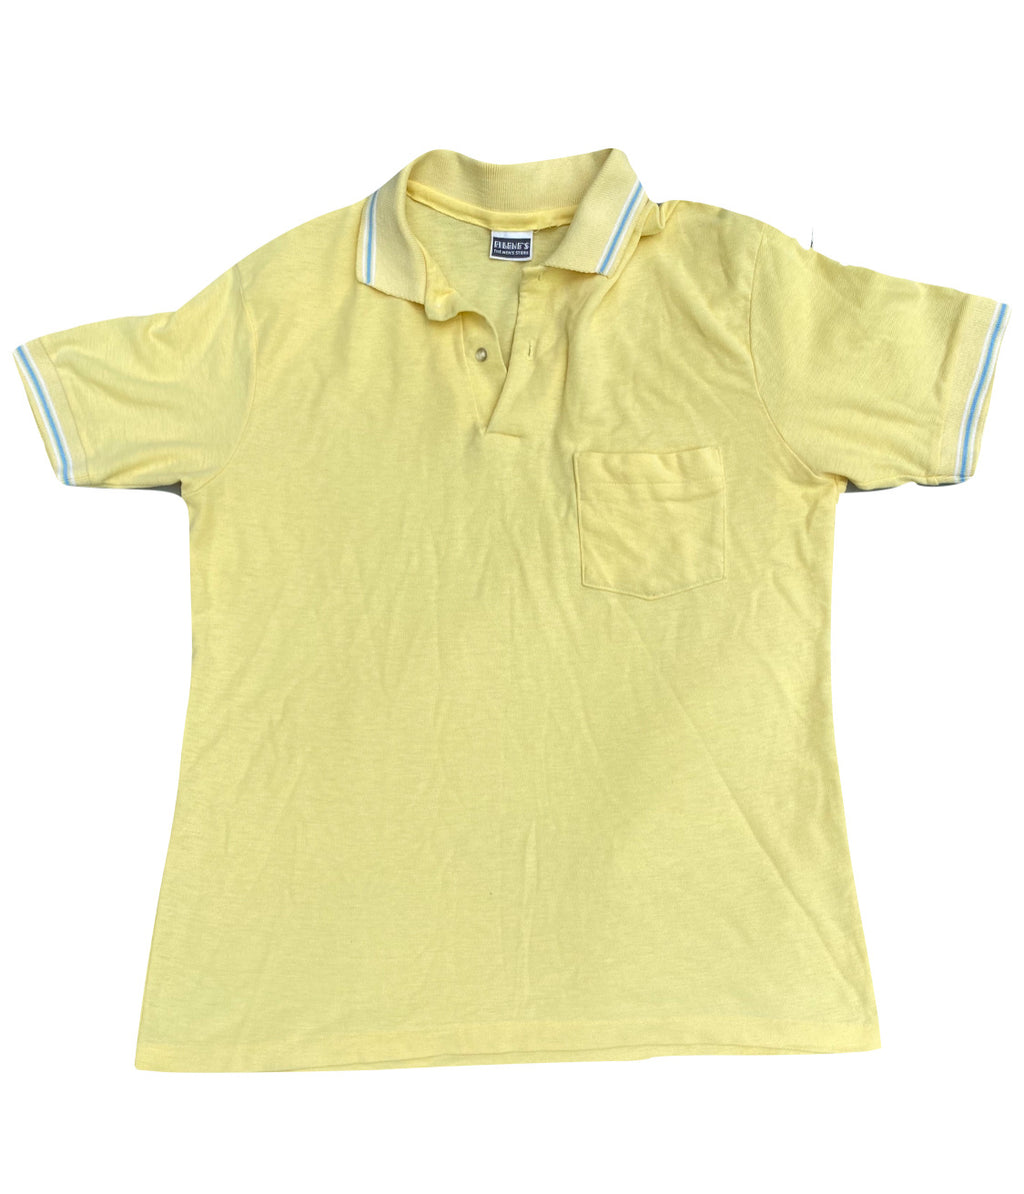 80s Chamois pearl snap shirt large – Vintage Sponsor